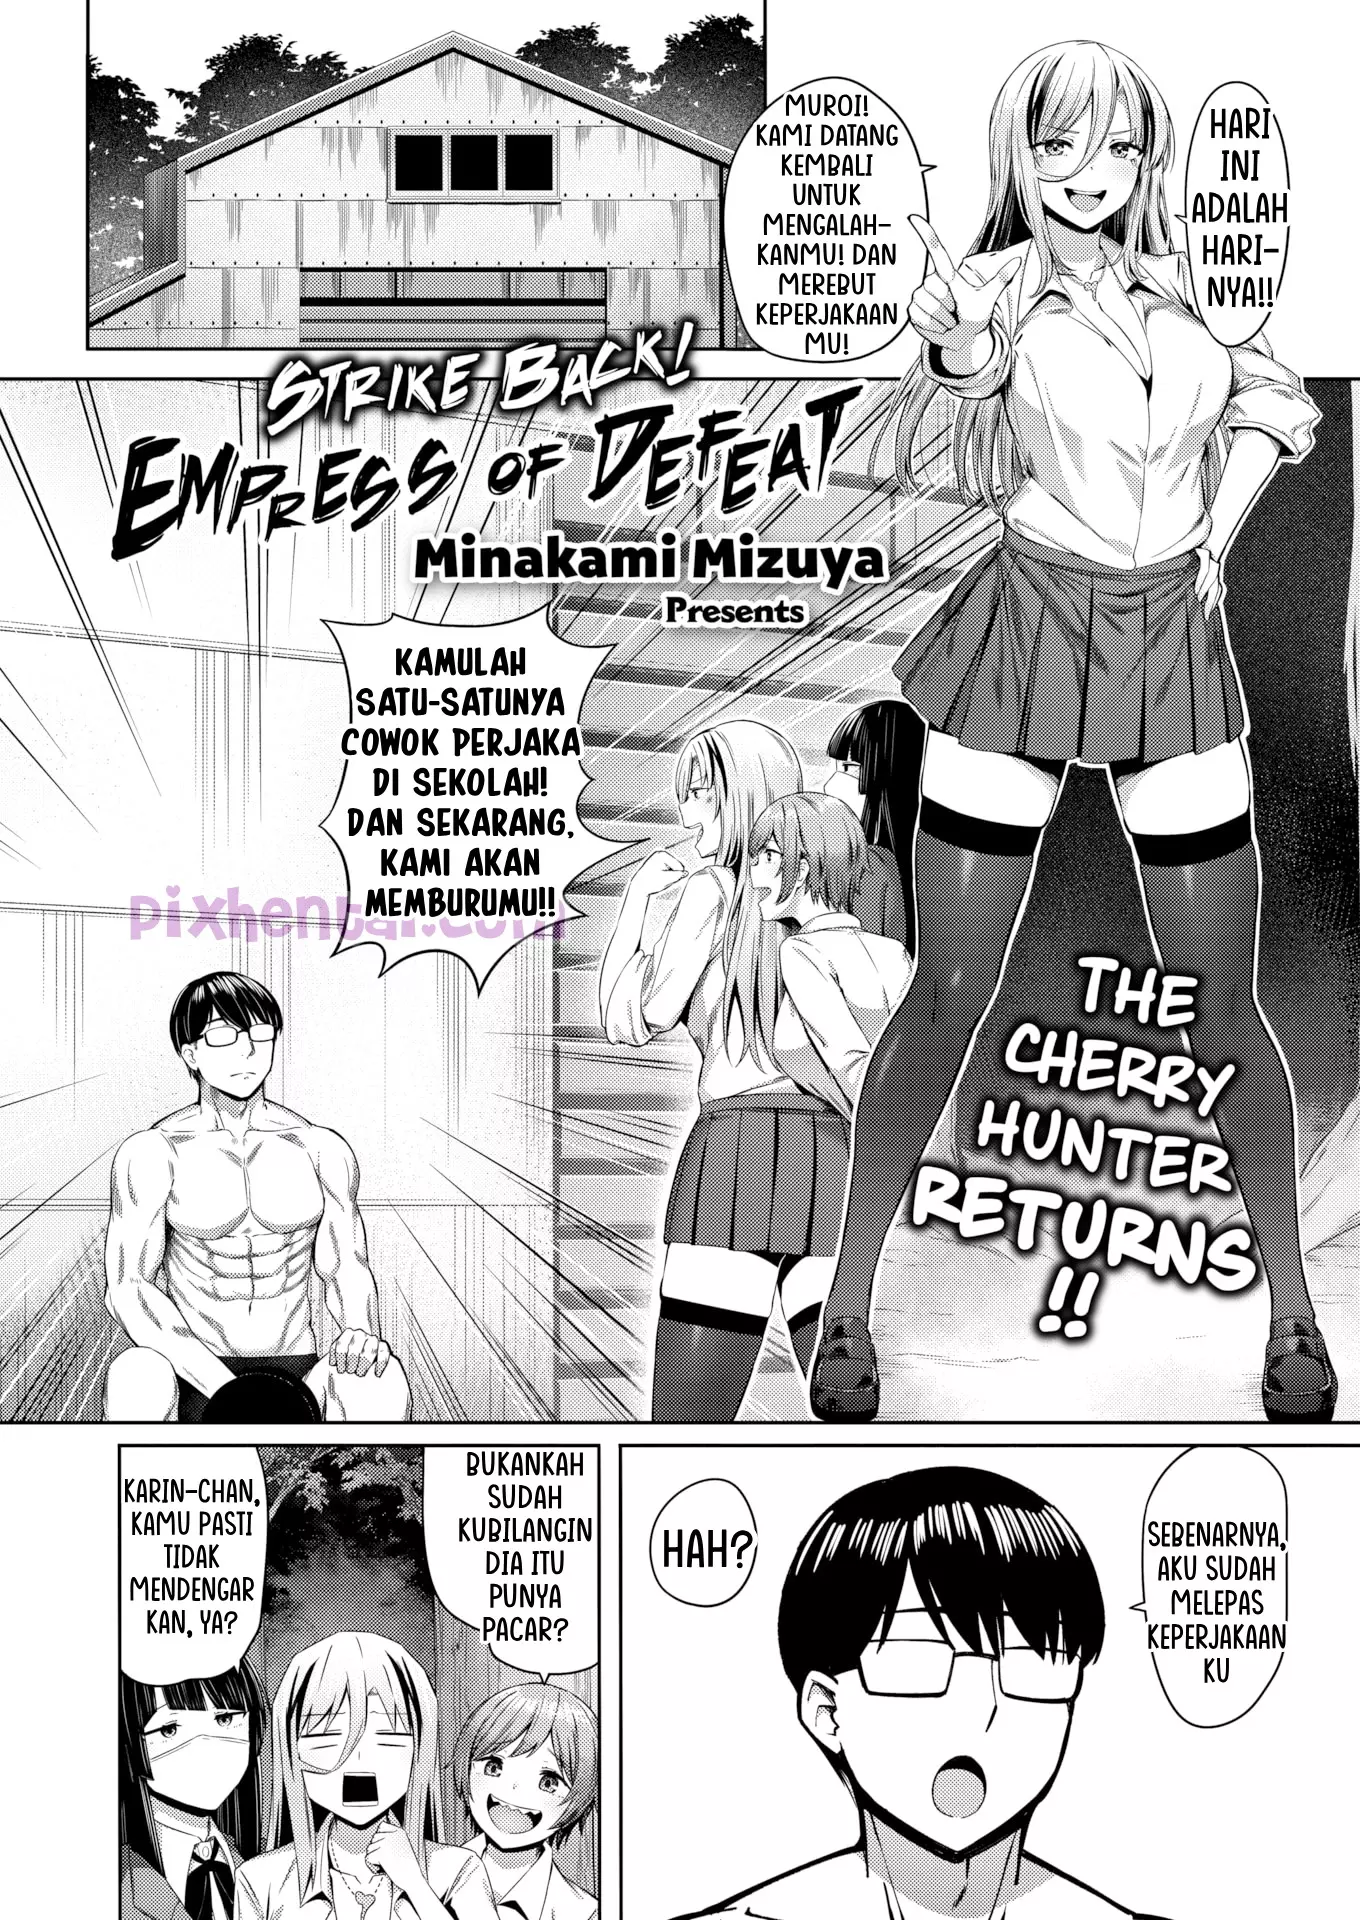 Komik hentai xxx manga sex bokep Strike Back Empress of Defeat The Cherry Hunter Returns 2